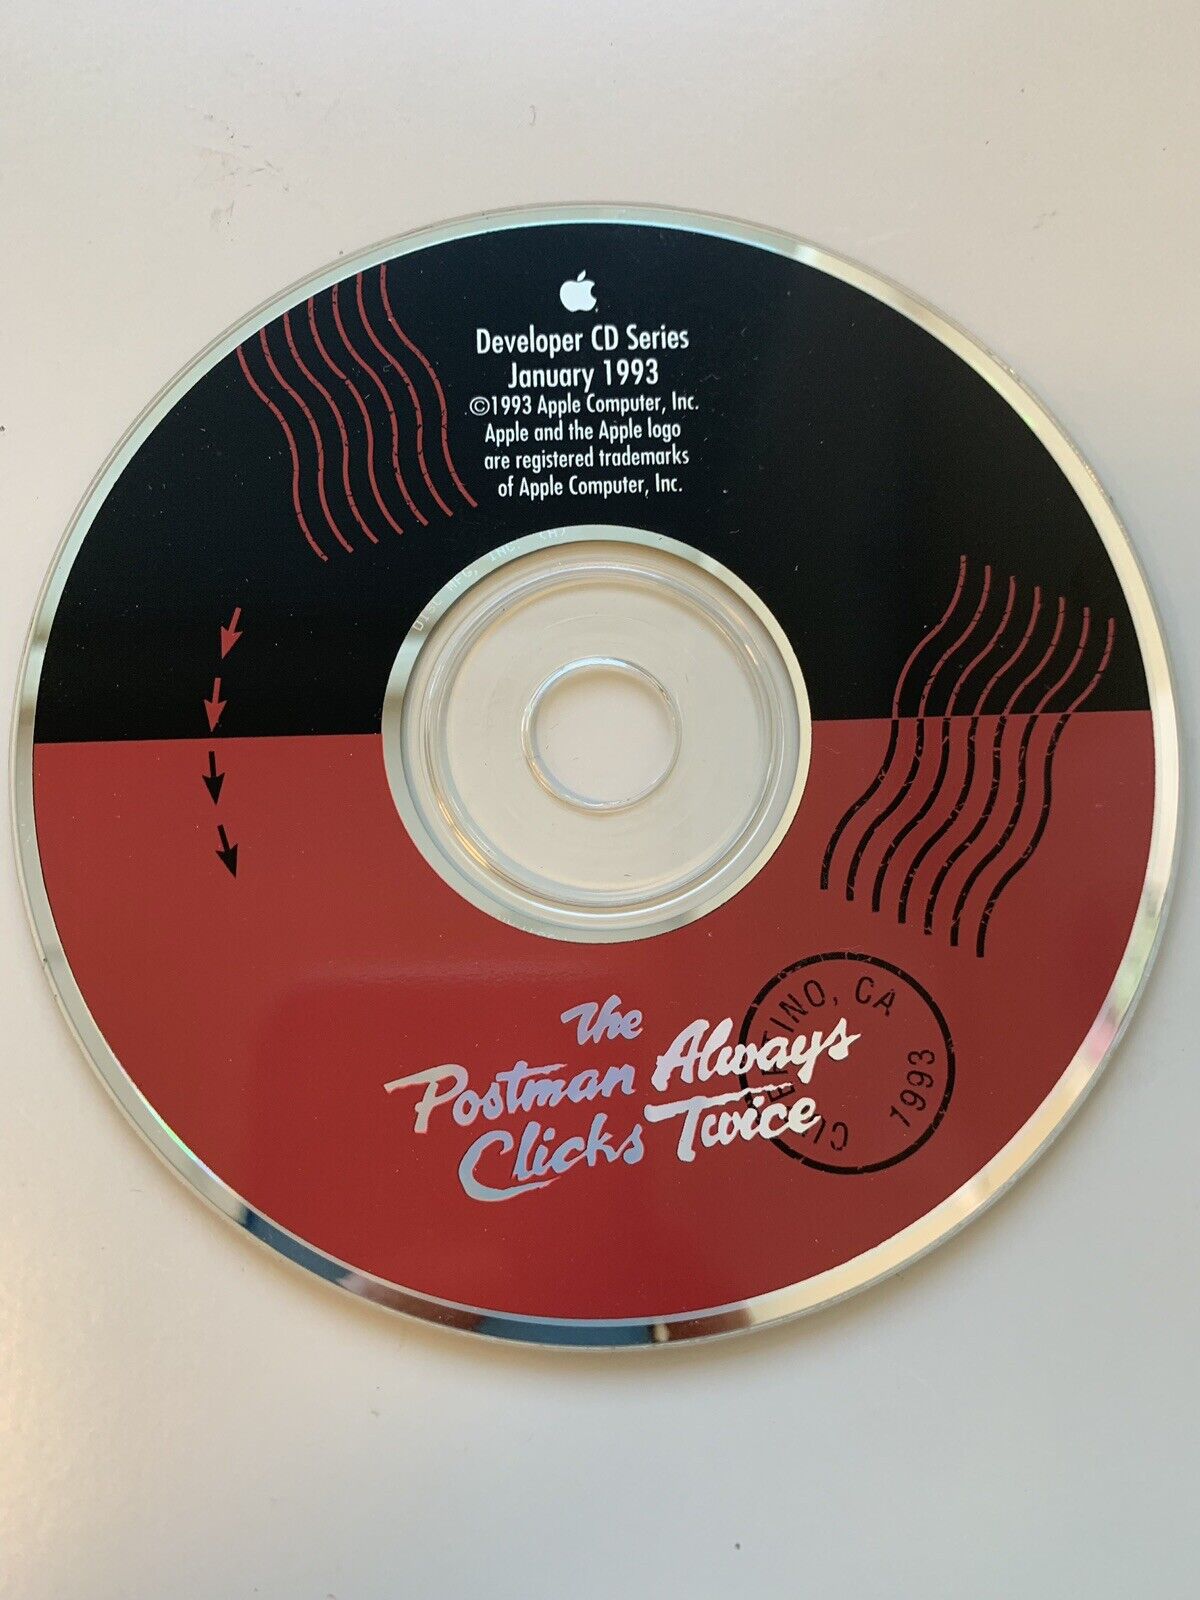 1993 January Apple Developer CD Series The Postman Always Clicks Twice